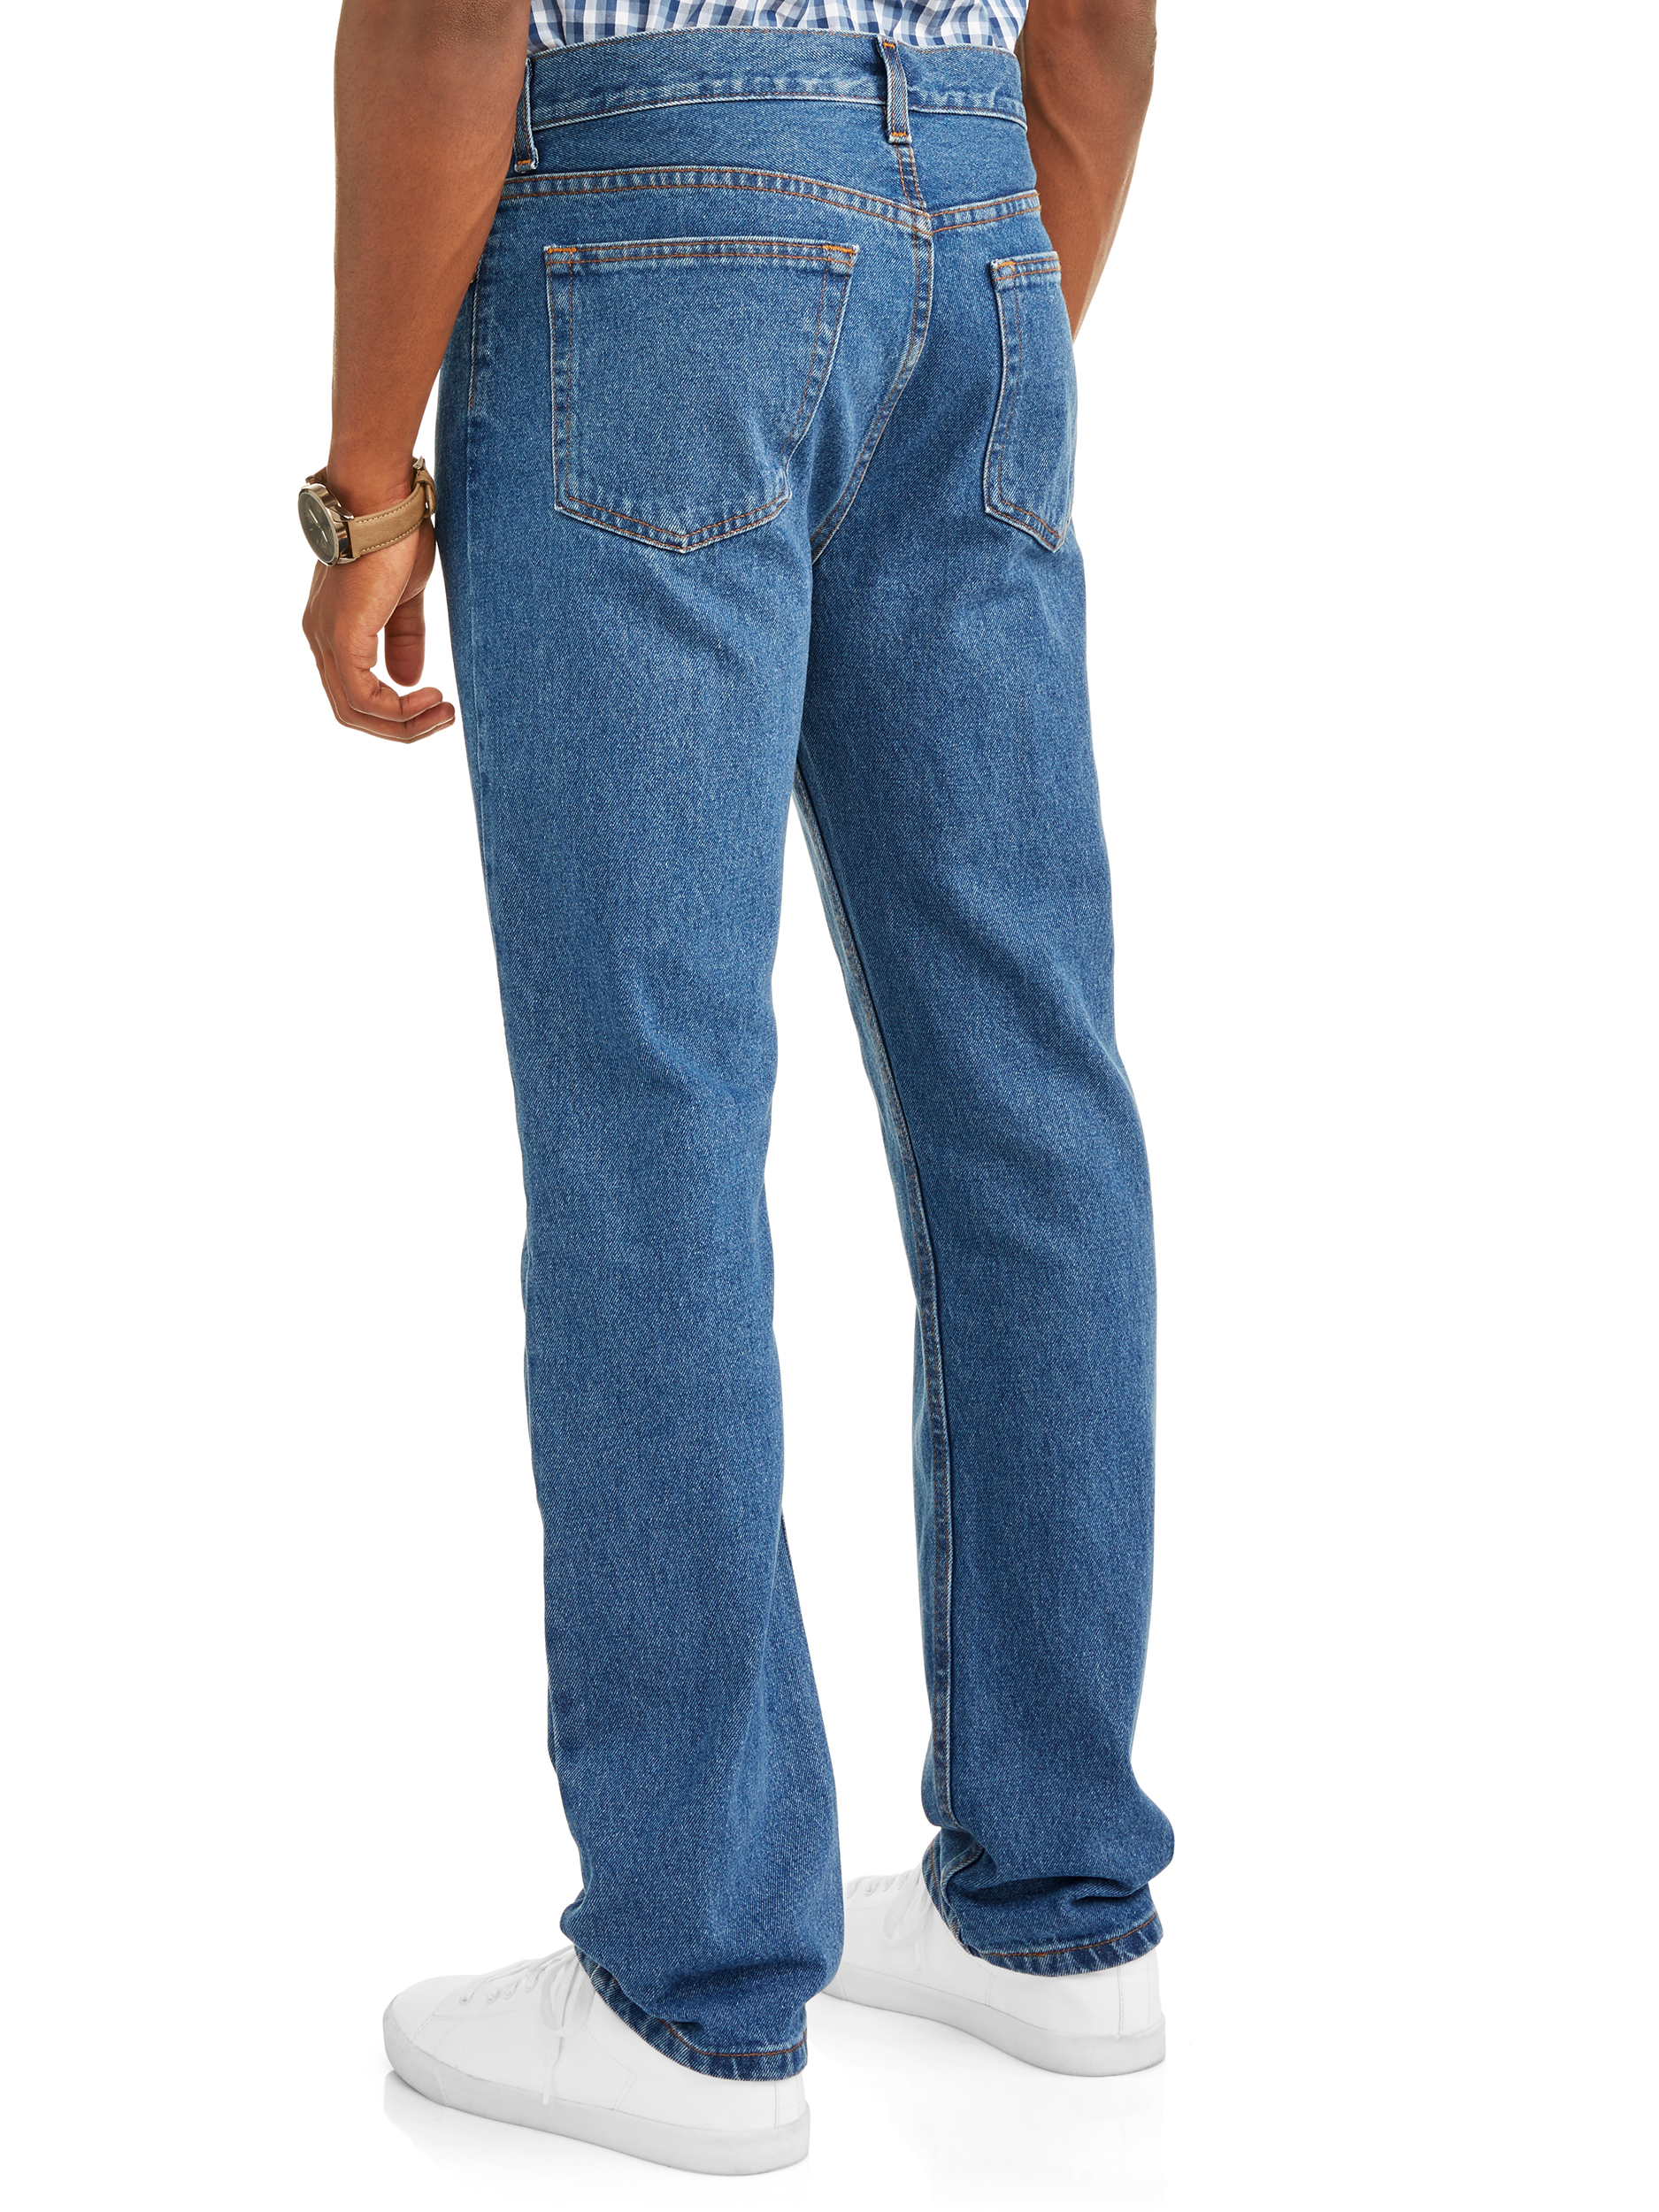 George Men's 100% Cotton Regular Fit Jeans, 2-Pack - image 3 of 7